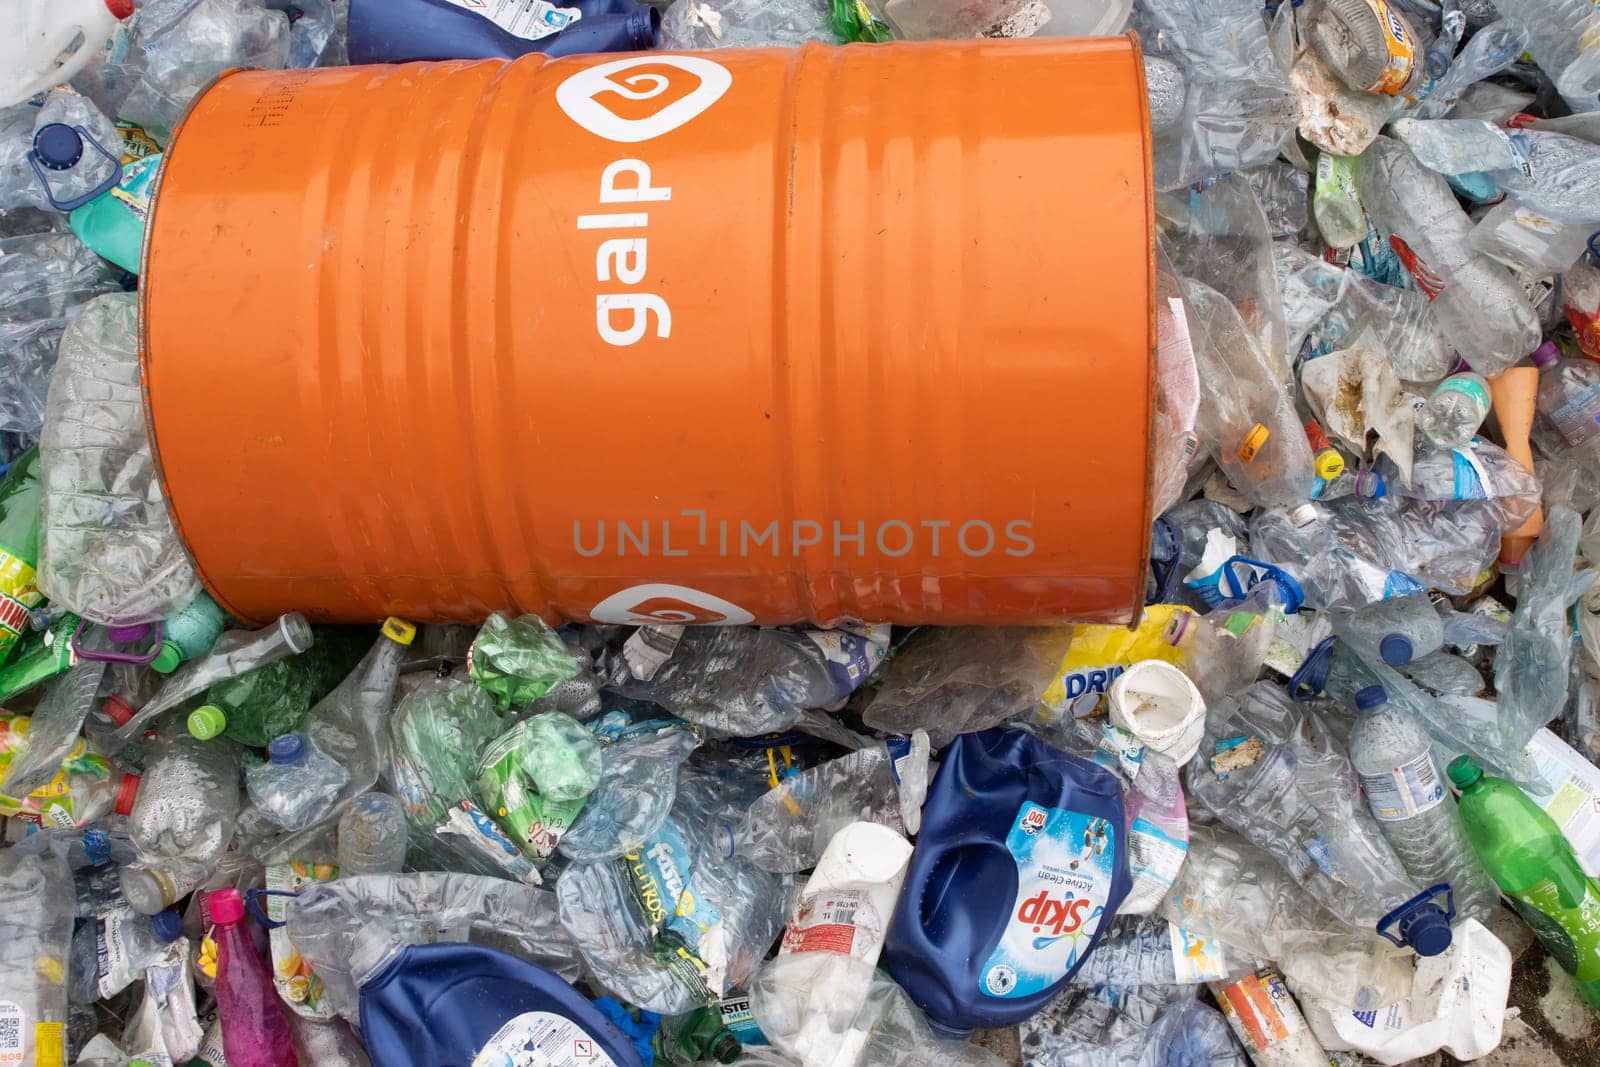 16 october 2022 Almada, Portugal: GALP orange barrel on the landfill full of plastic garbage by Studia72